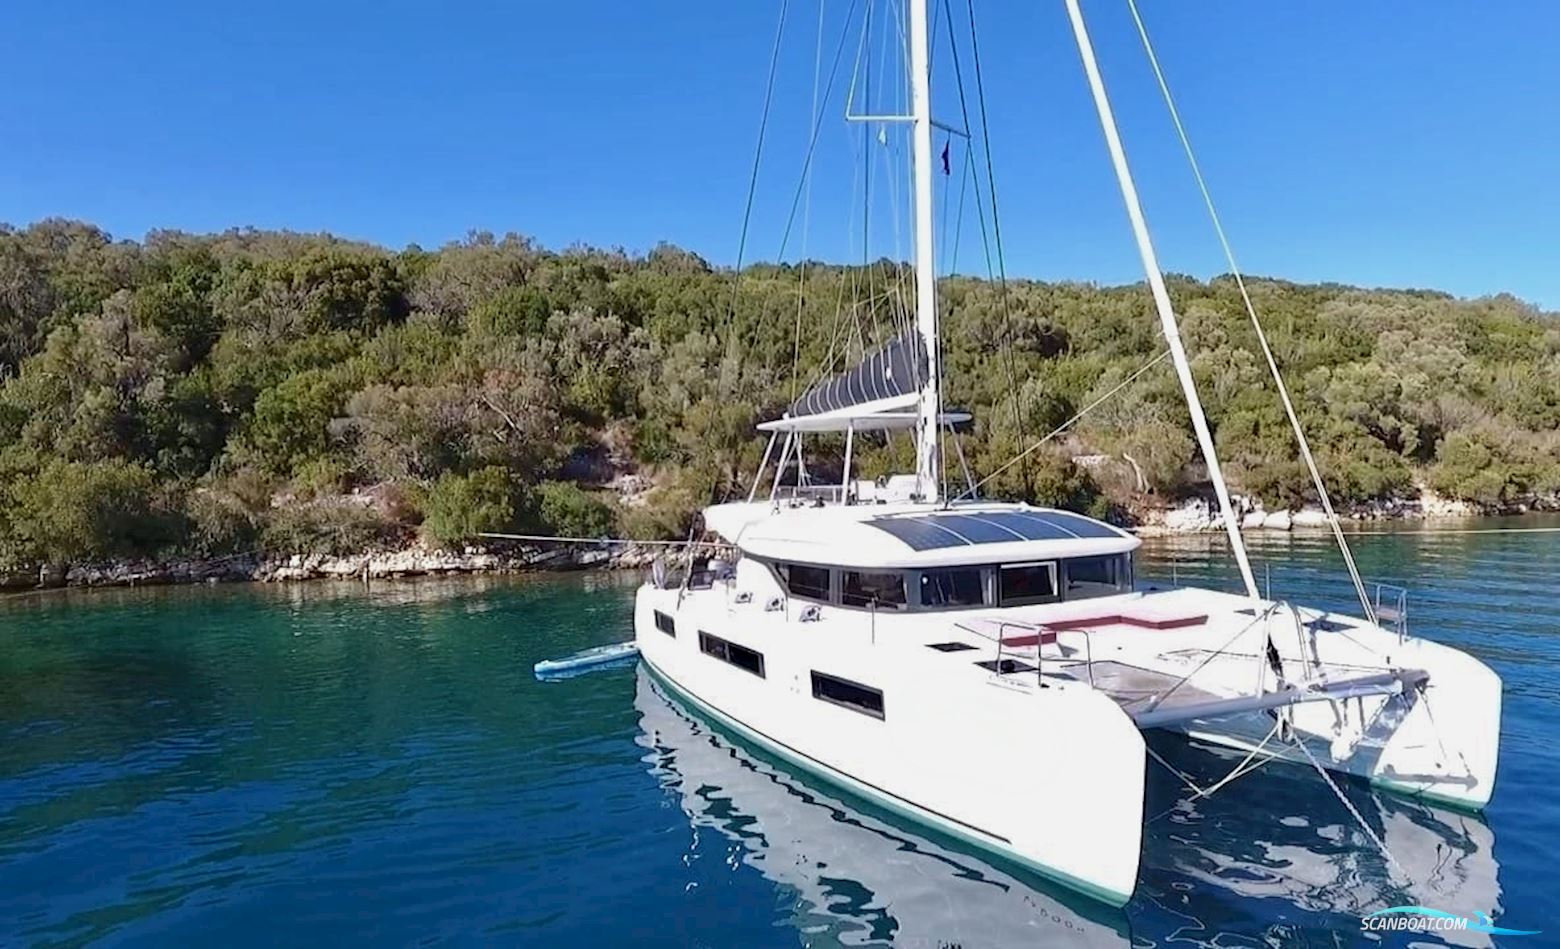 Lagoon LG 50 Multi hull boat 2019, with Yanmar 4JH80 engine, Greece